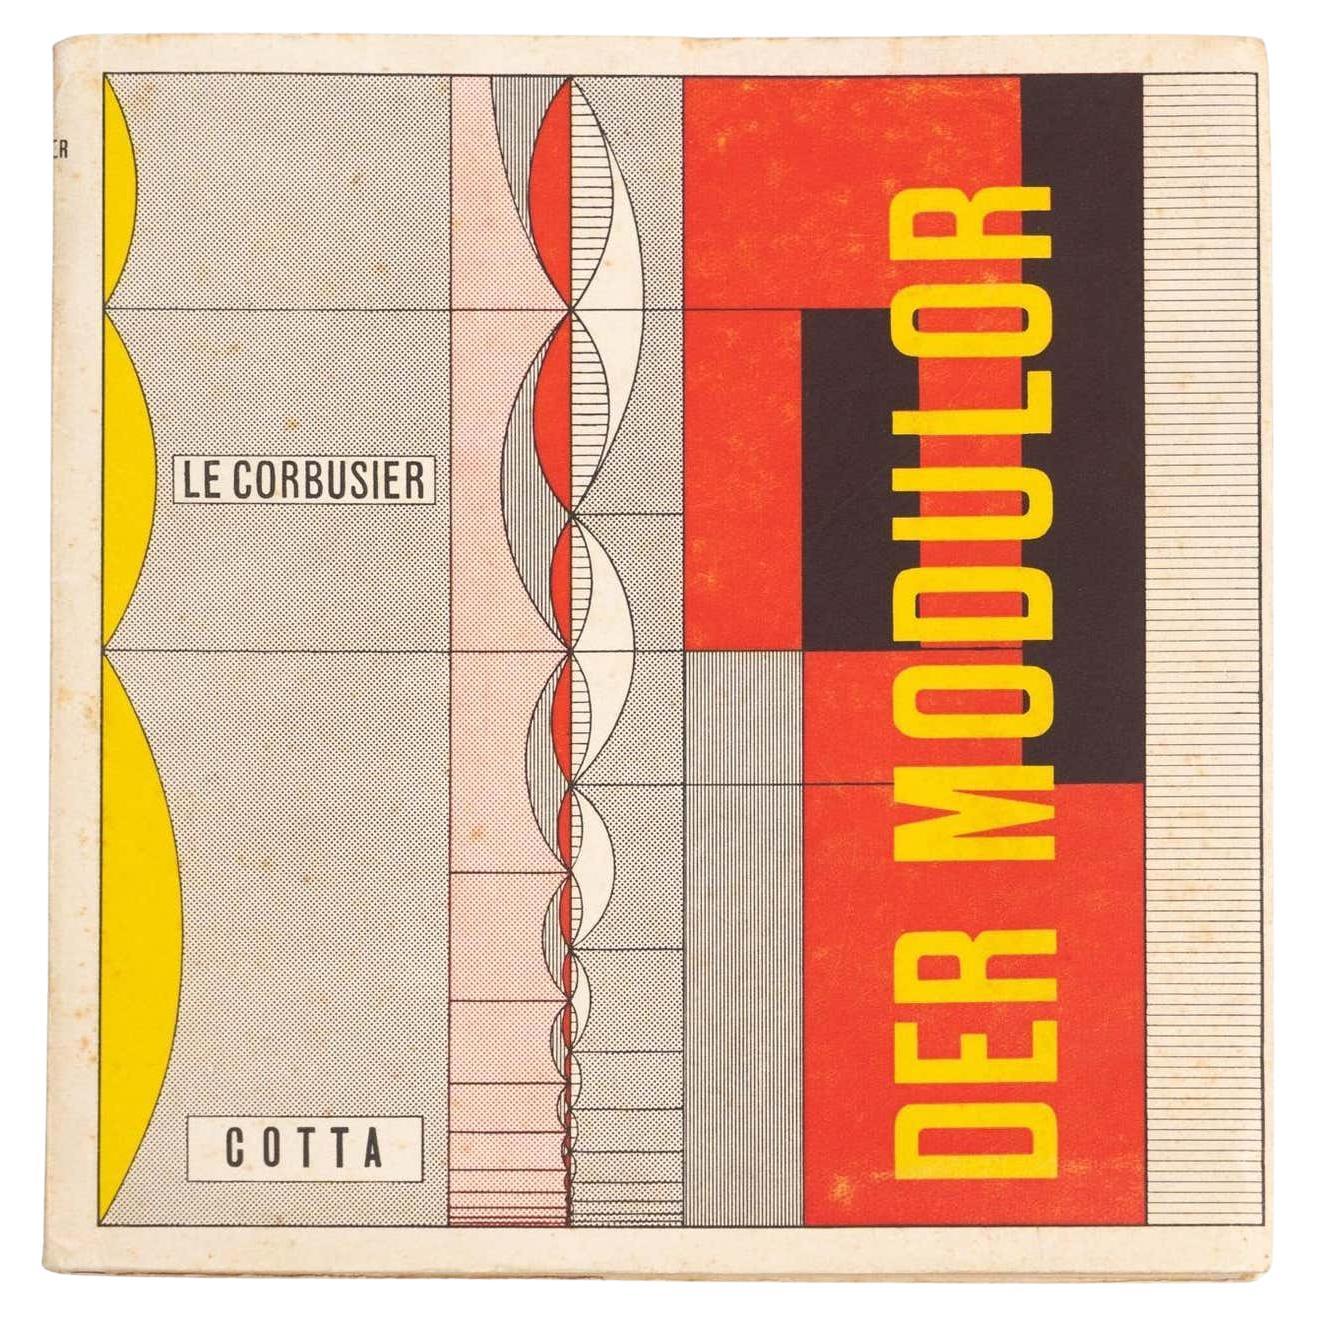 Le Corbusier, Buch „Der Modulor“, 1956